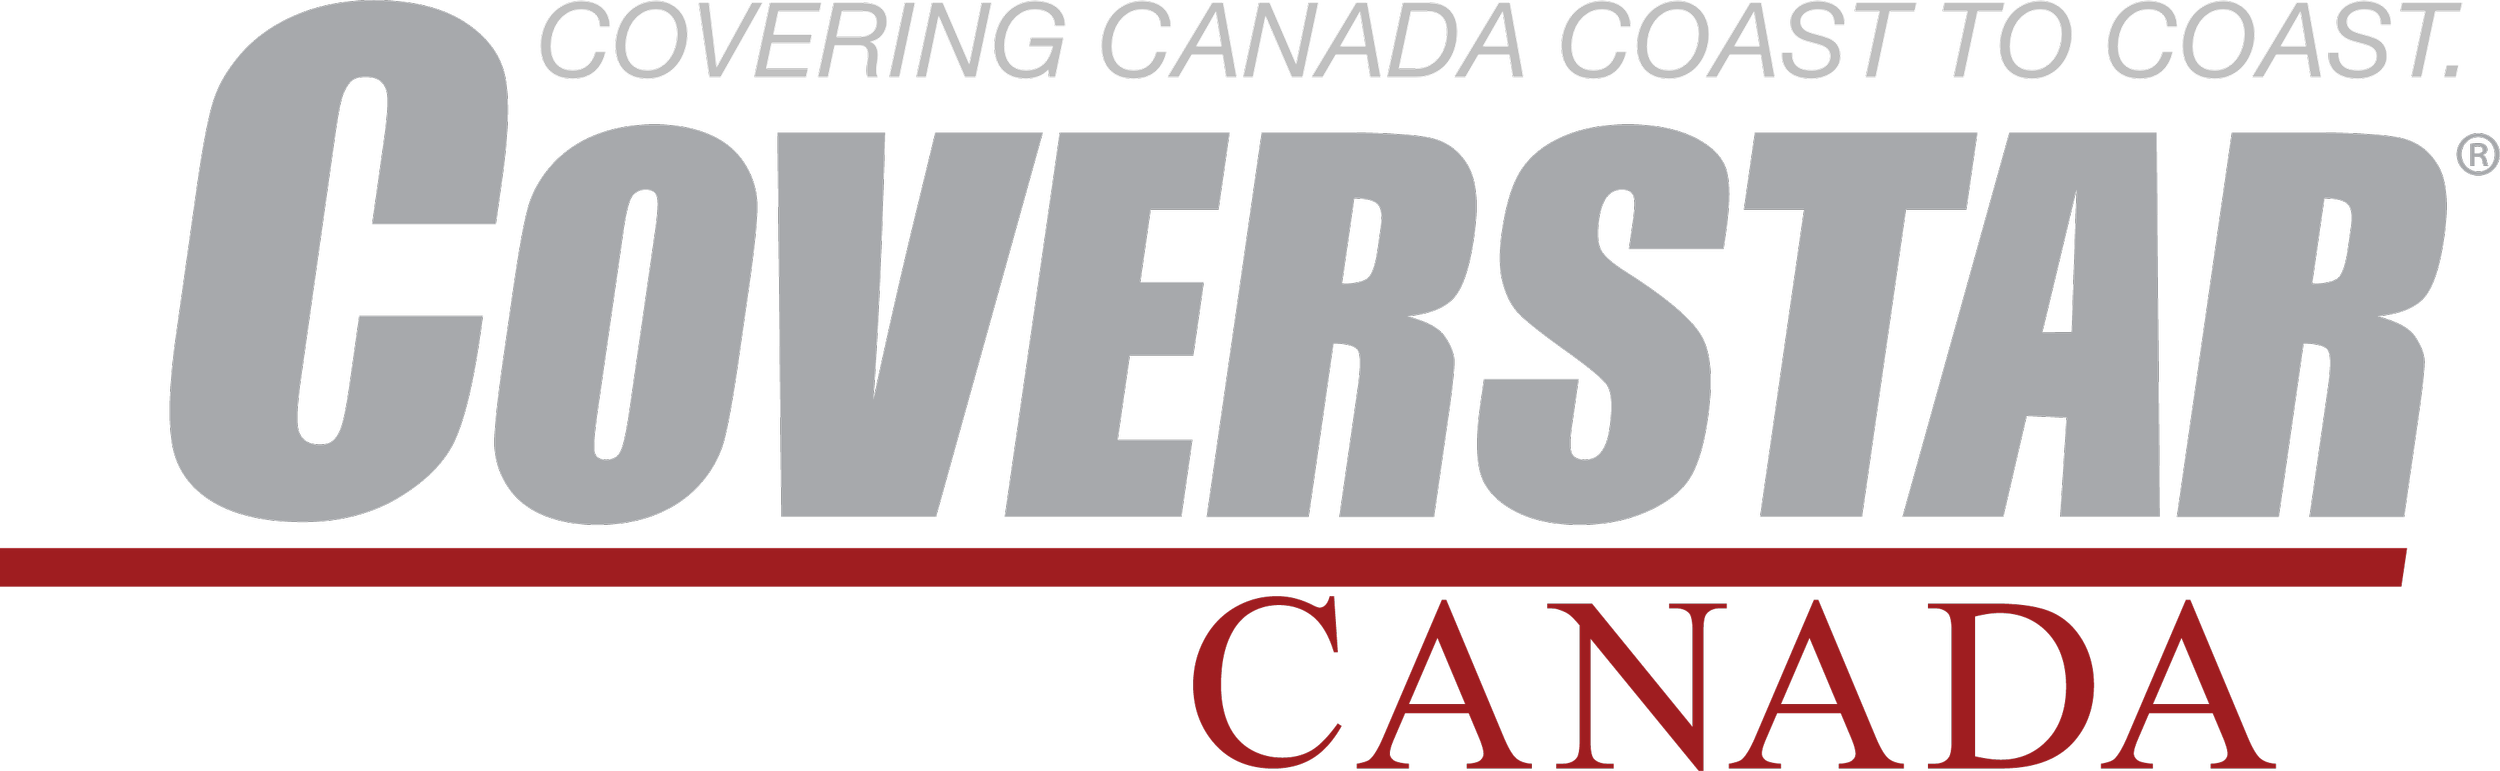 Coverstar Canada